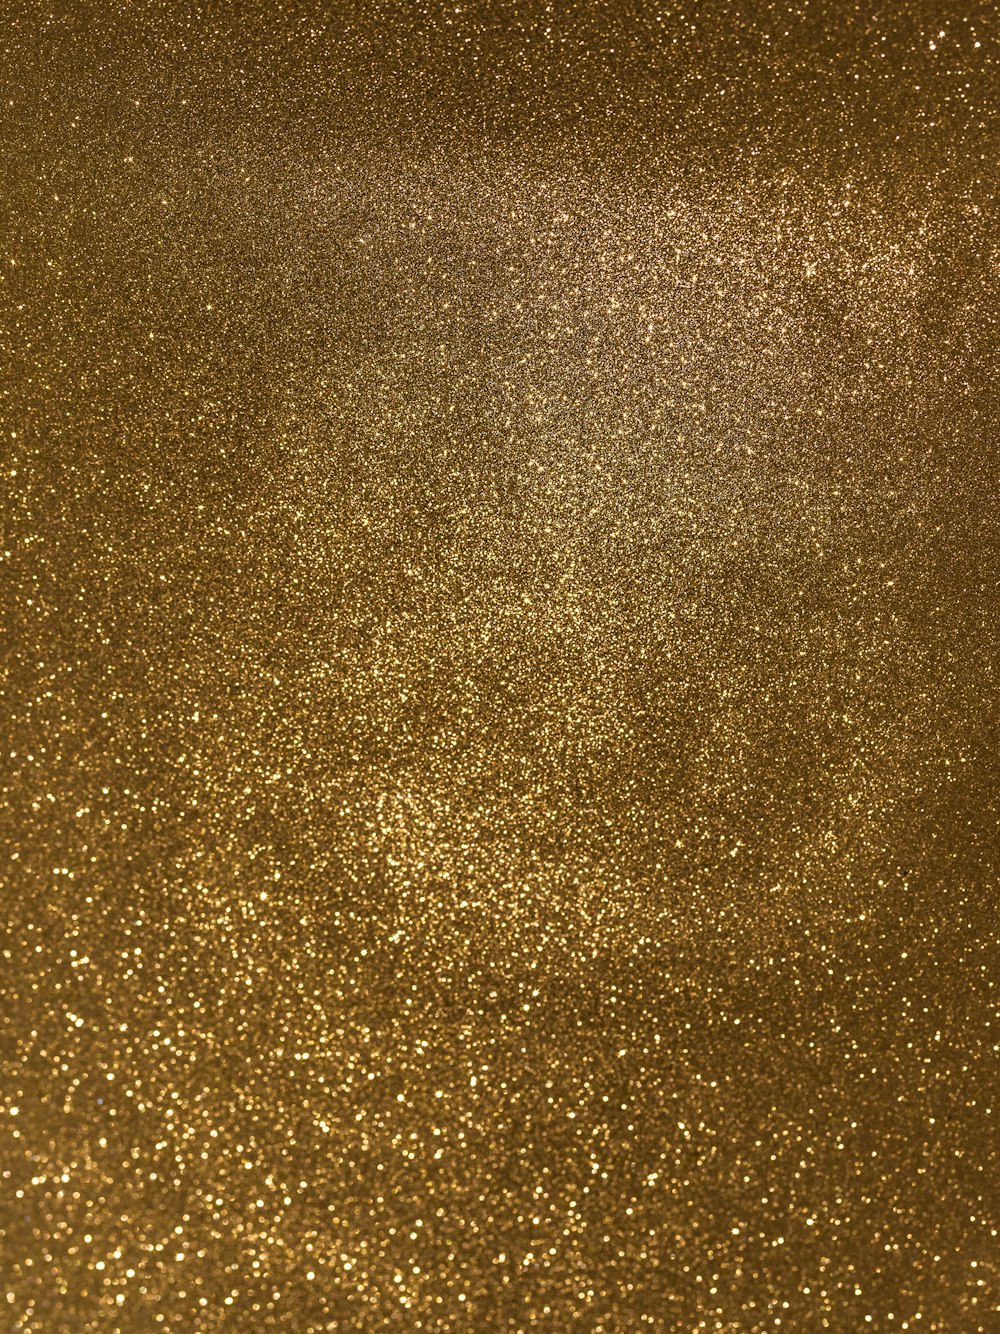 Gold Foil Pictures [HQ] | Download Free Images on Unsplash